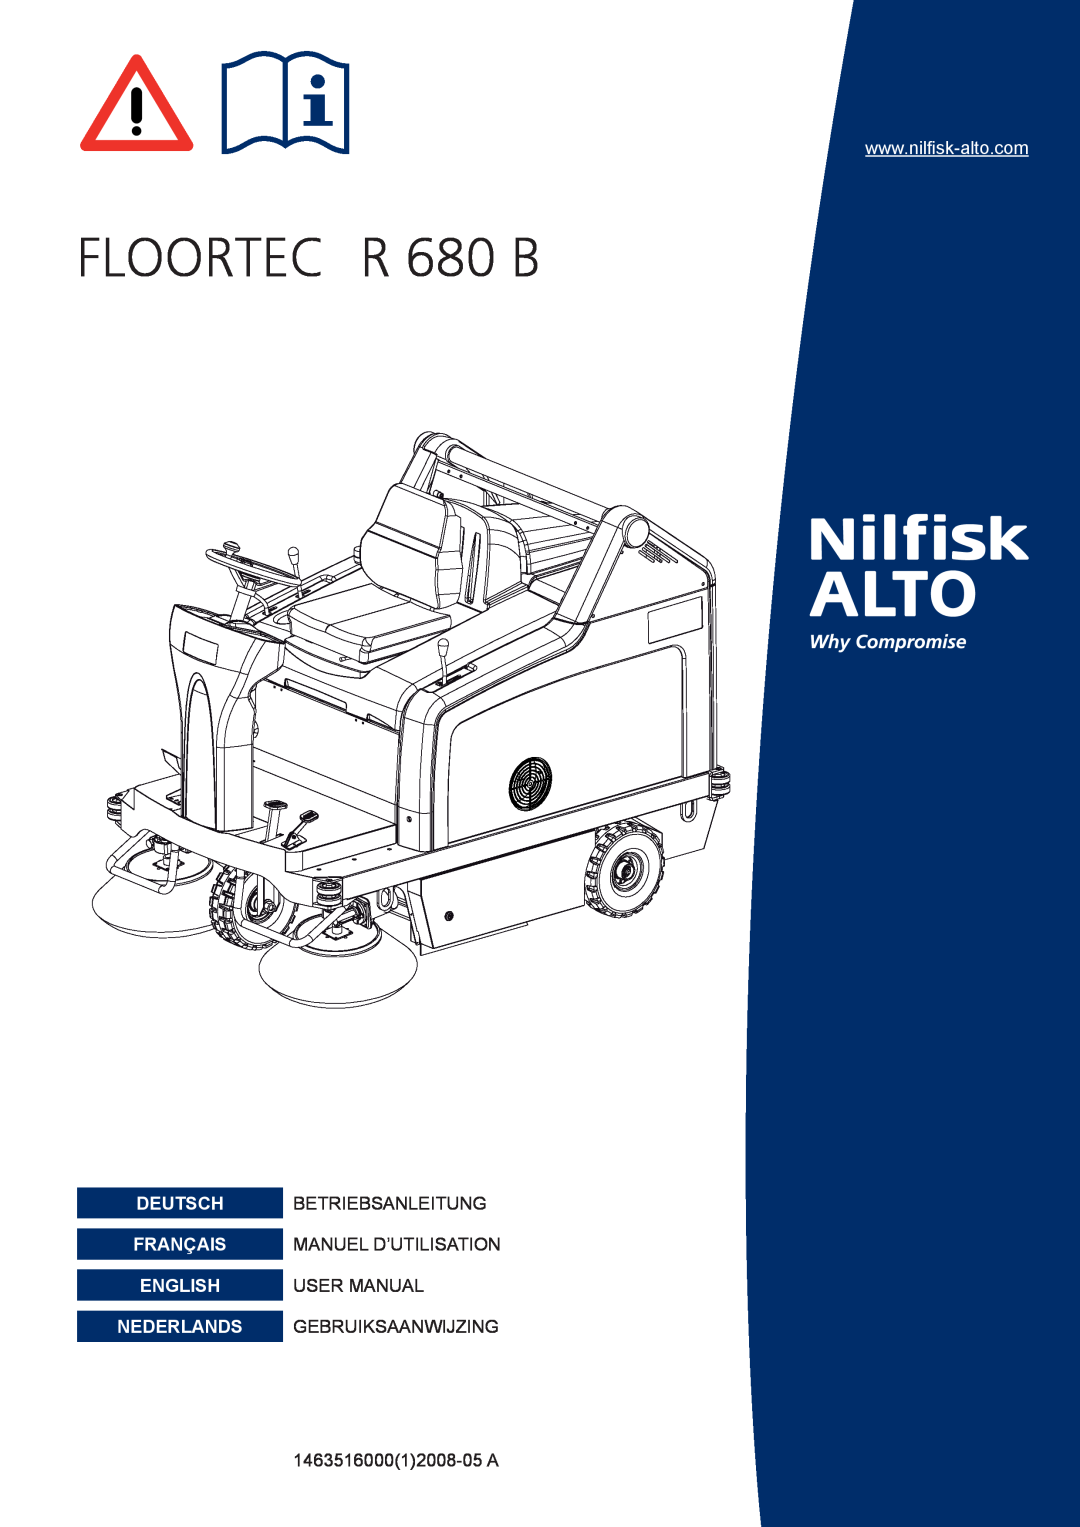 Nilfisk-ALTO R 680 B manuel dutilisation Deutsch, Betriebsanleitung, Français, Manuel D’Utilisation, English, User Manual 